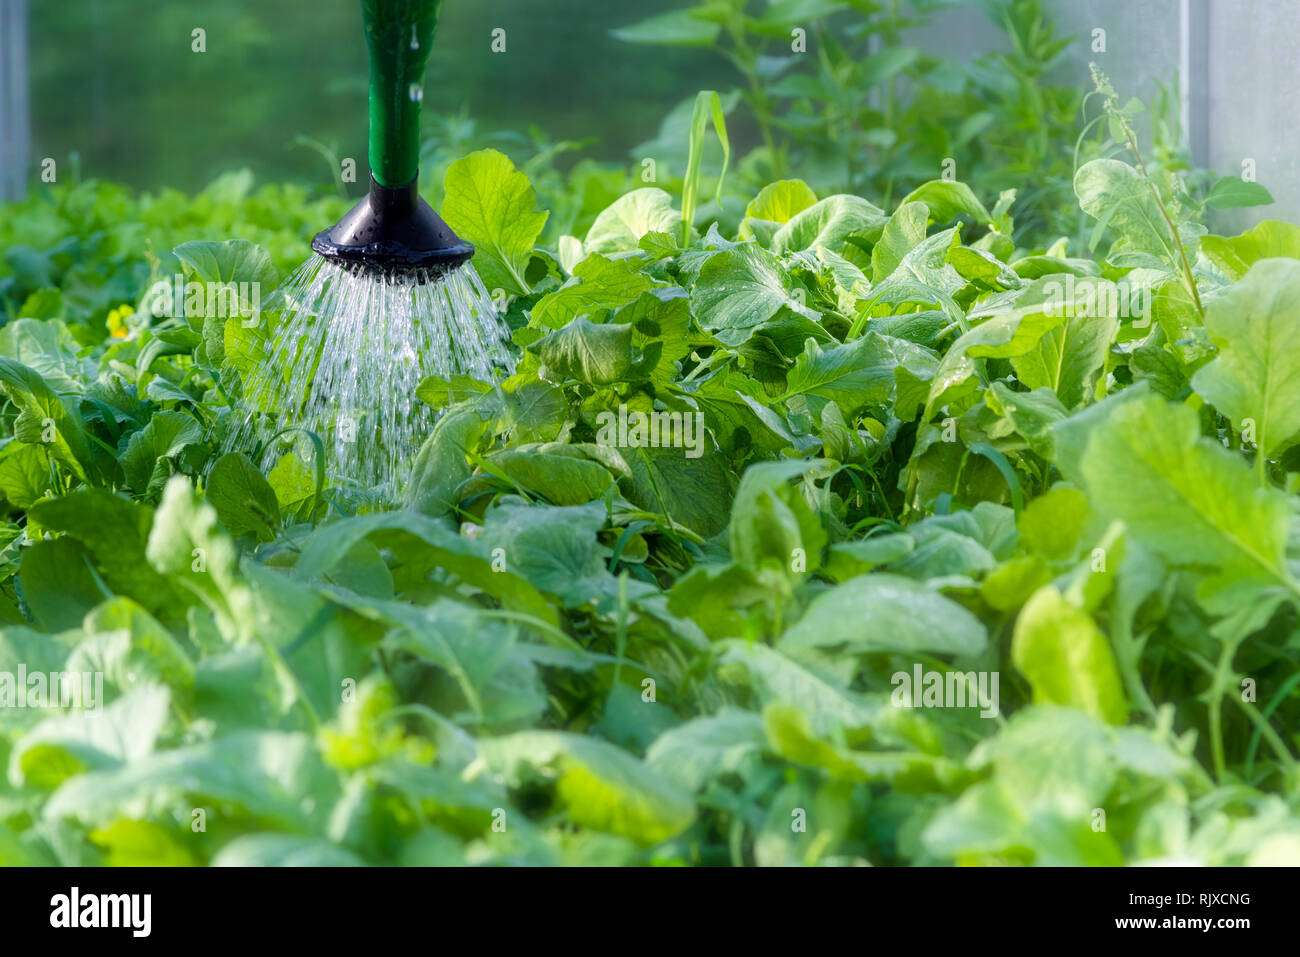 Watering vegetables in greenhouse. Growing organic vegetables. Urban farming Stock Photo